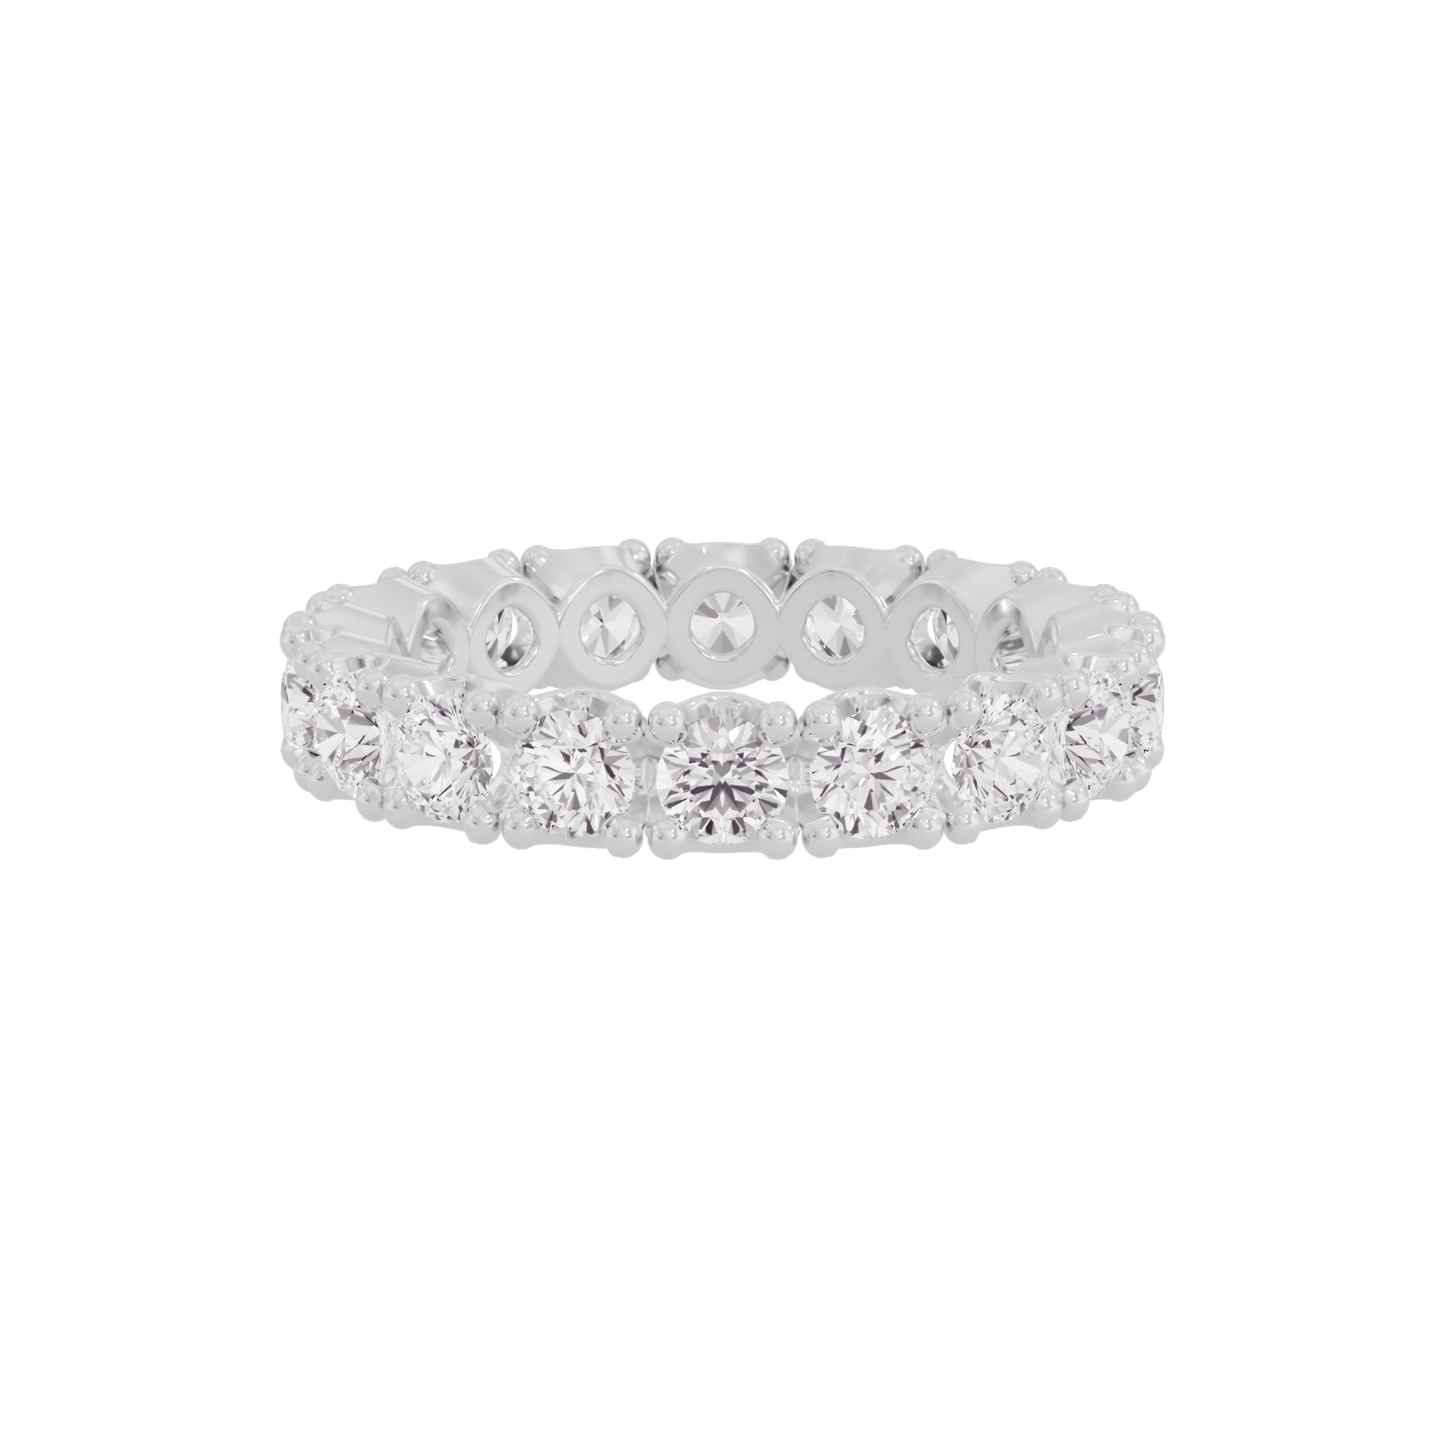 Stunning Ornate Diamond Ring